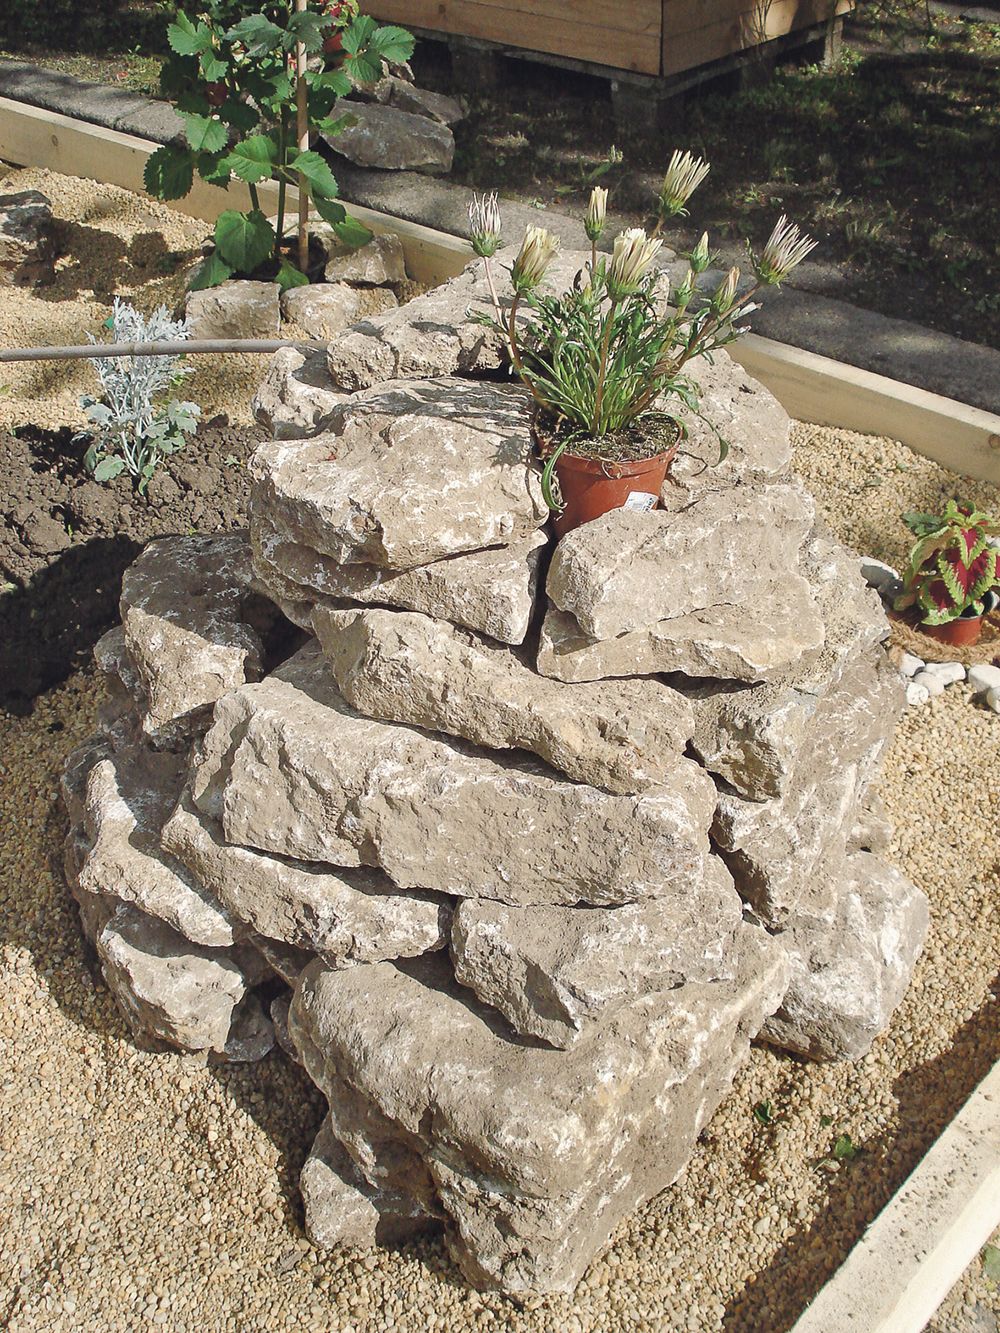                                Tema batu alam, yang tersusun bertumpuk dengan menggunakan batu-batu pecah yang berukuran tidak beraturan. 